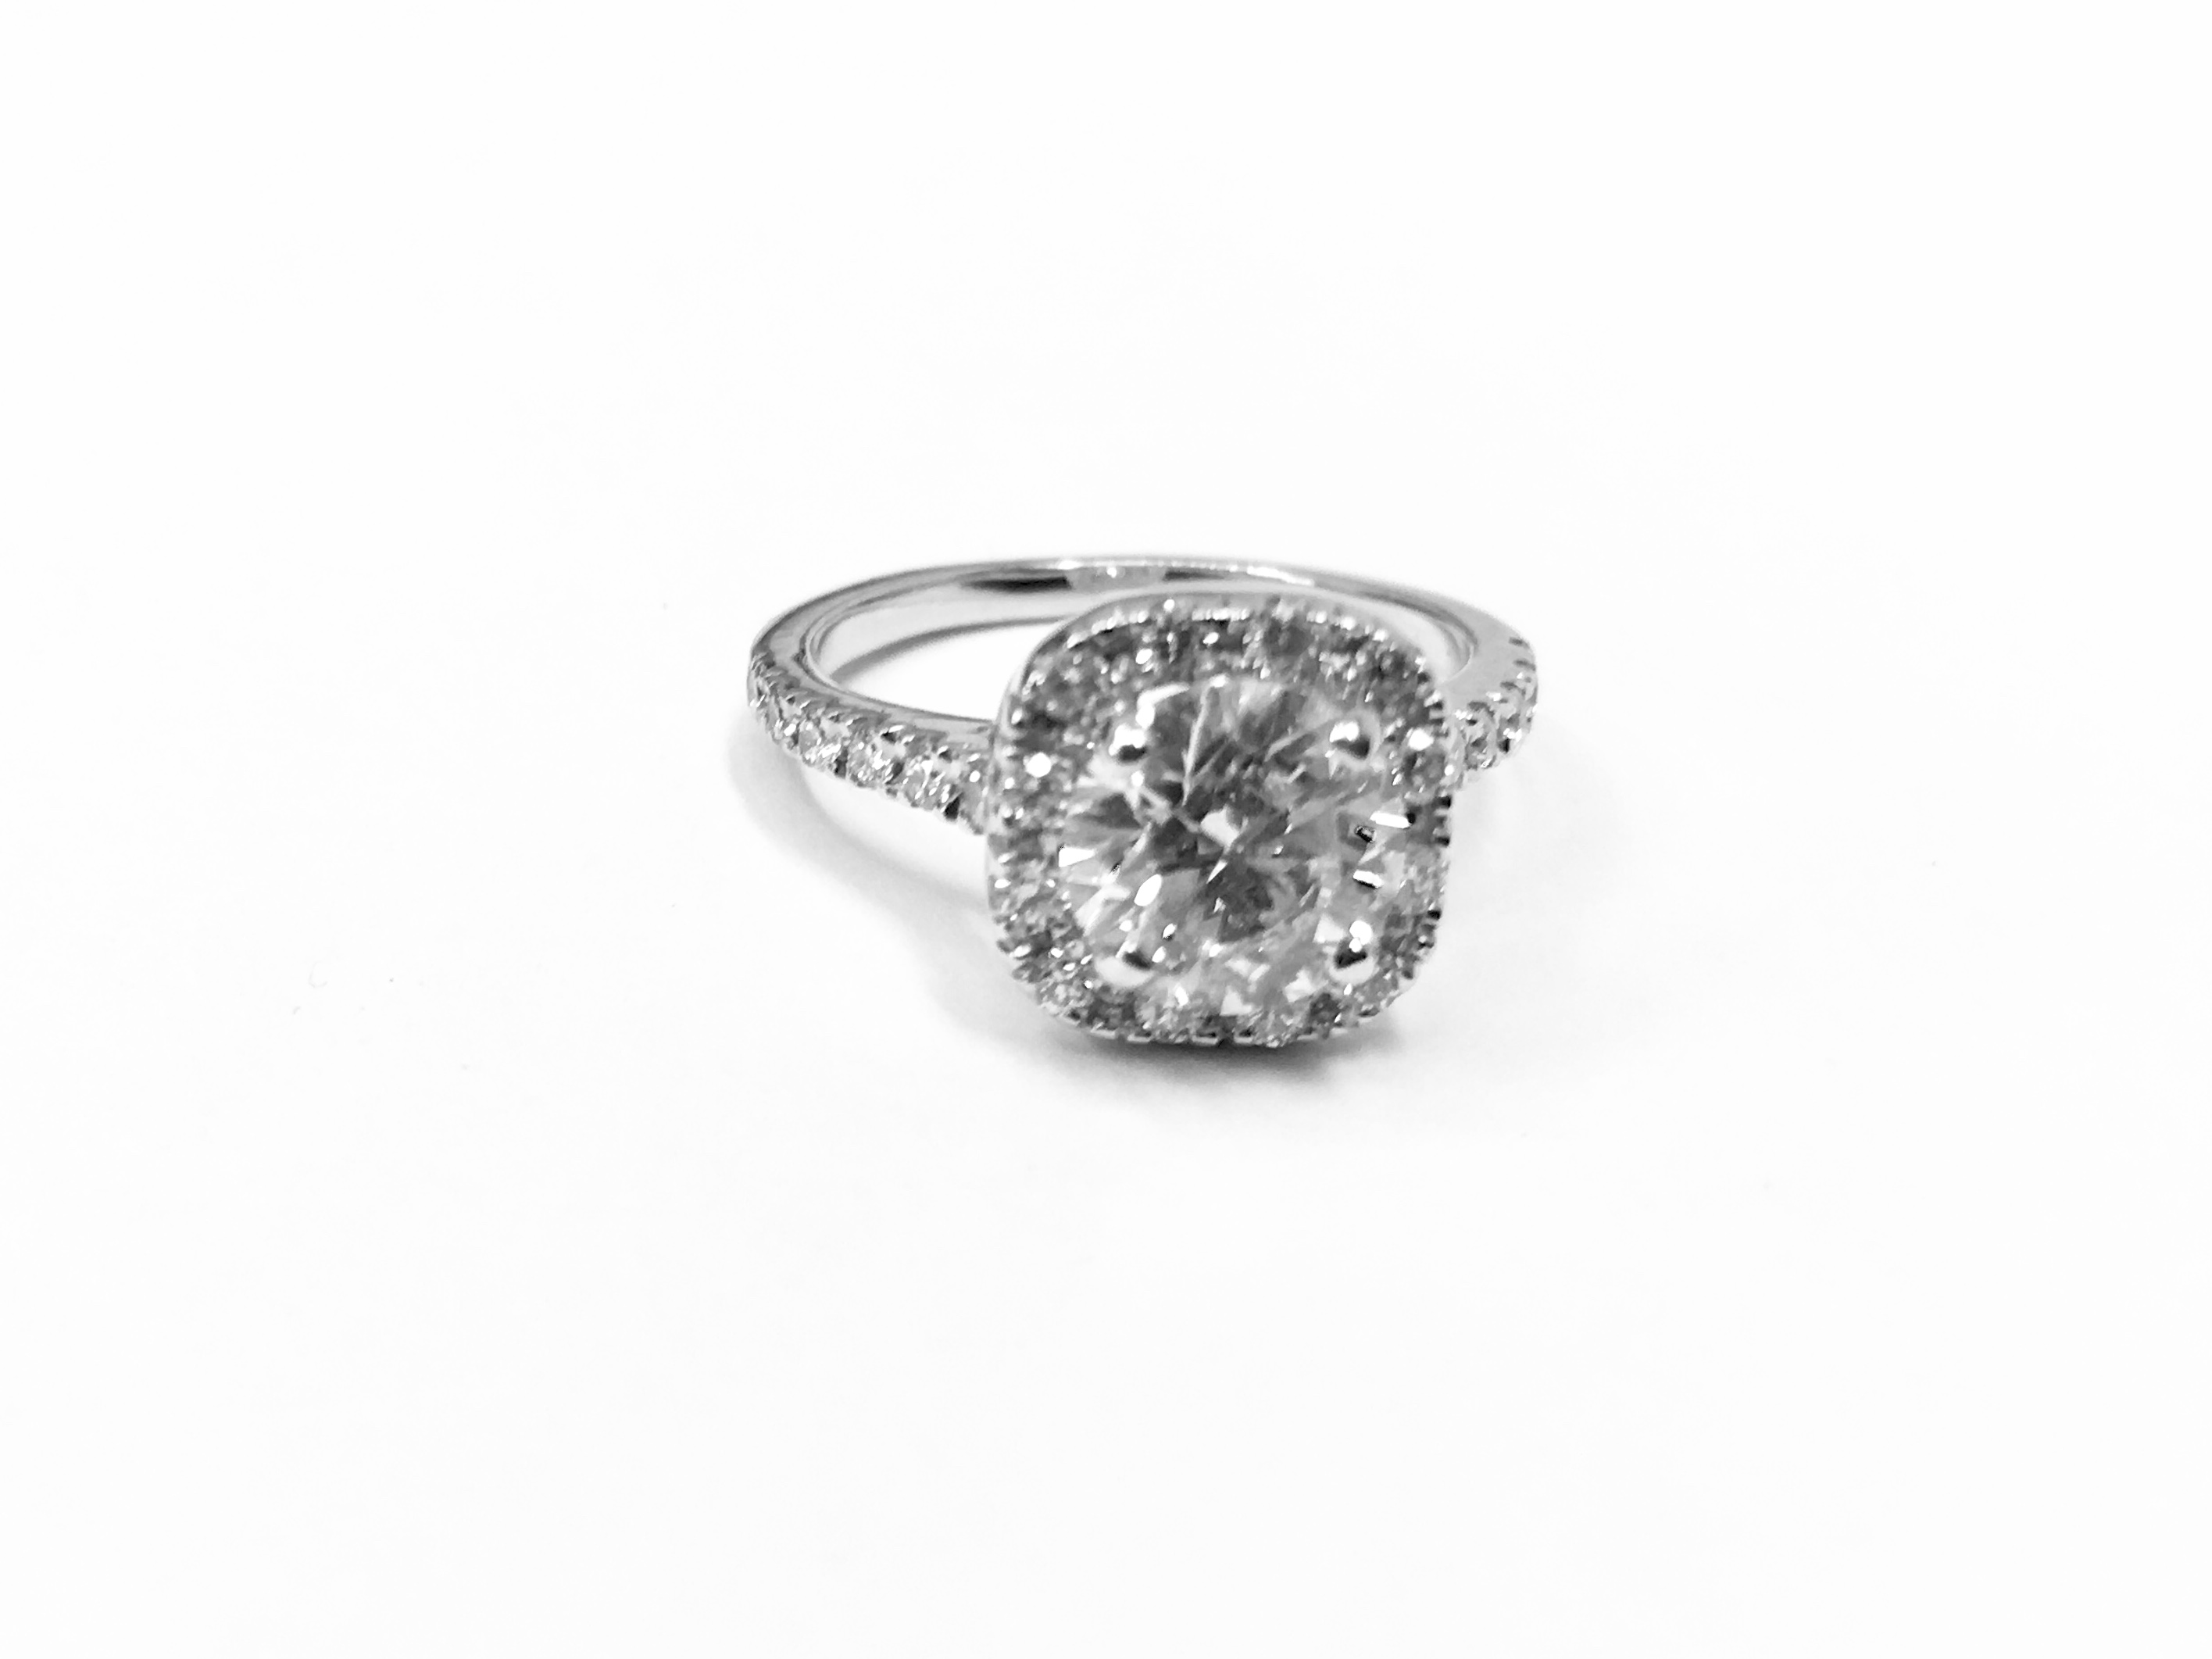 1.25ct diamond halo ring set in 18ct white gold - Image 8 of 24